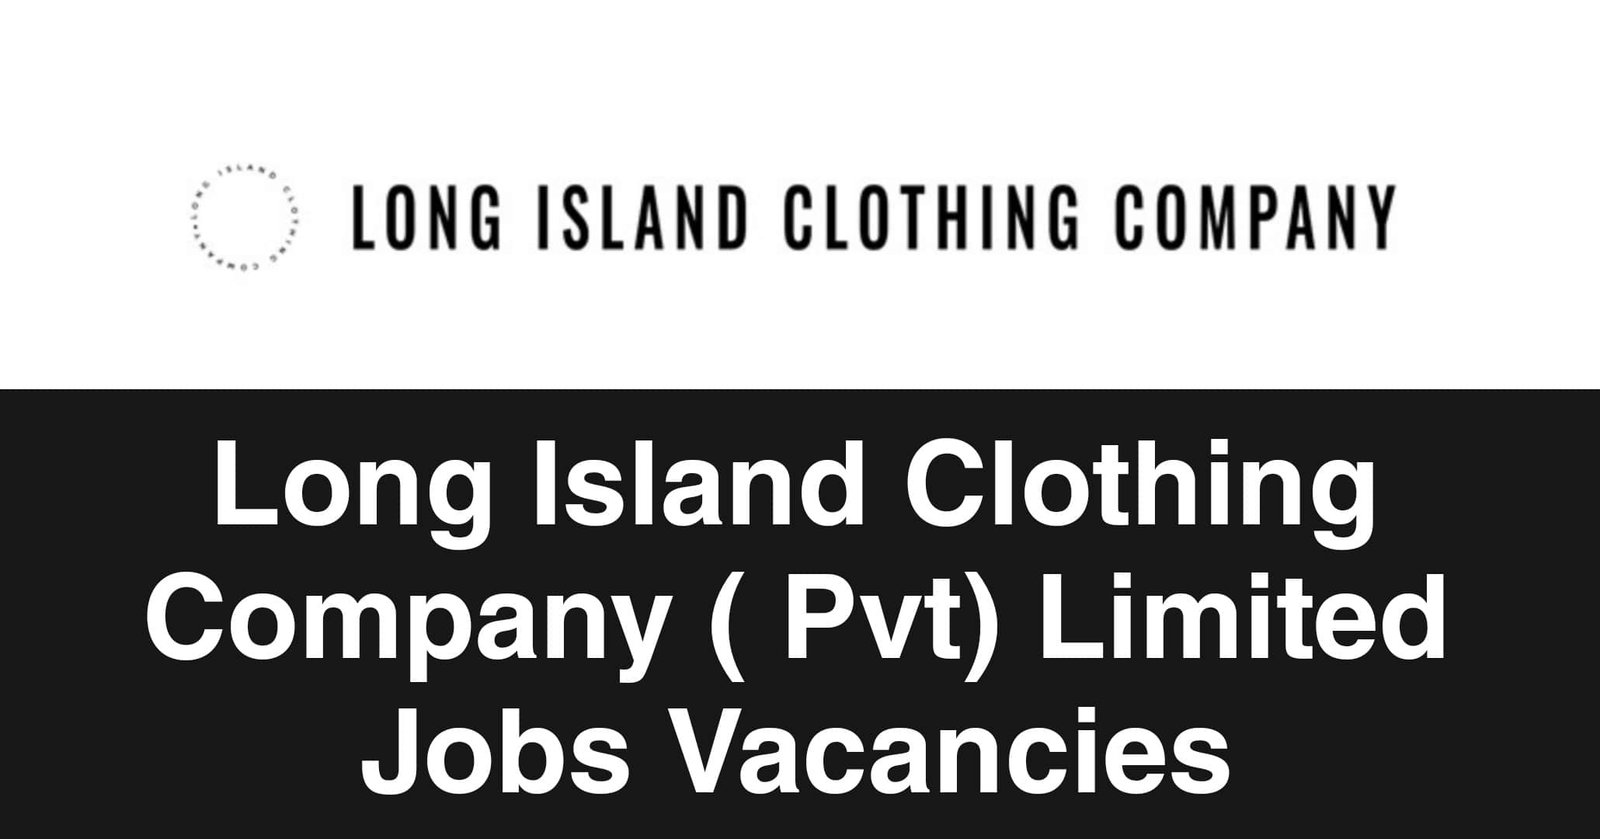 Long Island Clothing Company (Pvt) Limited Jobs Vacancies